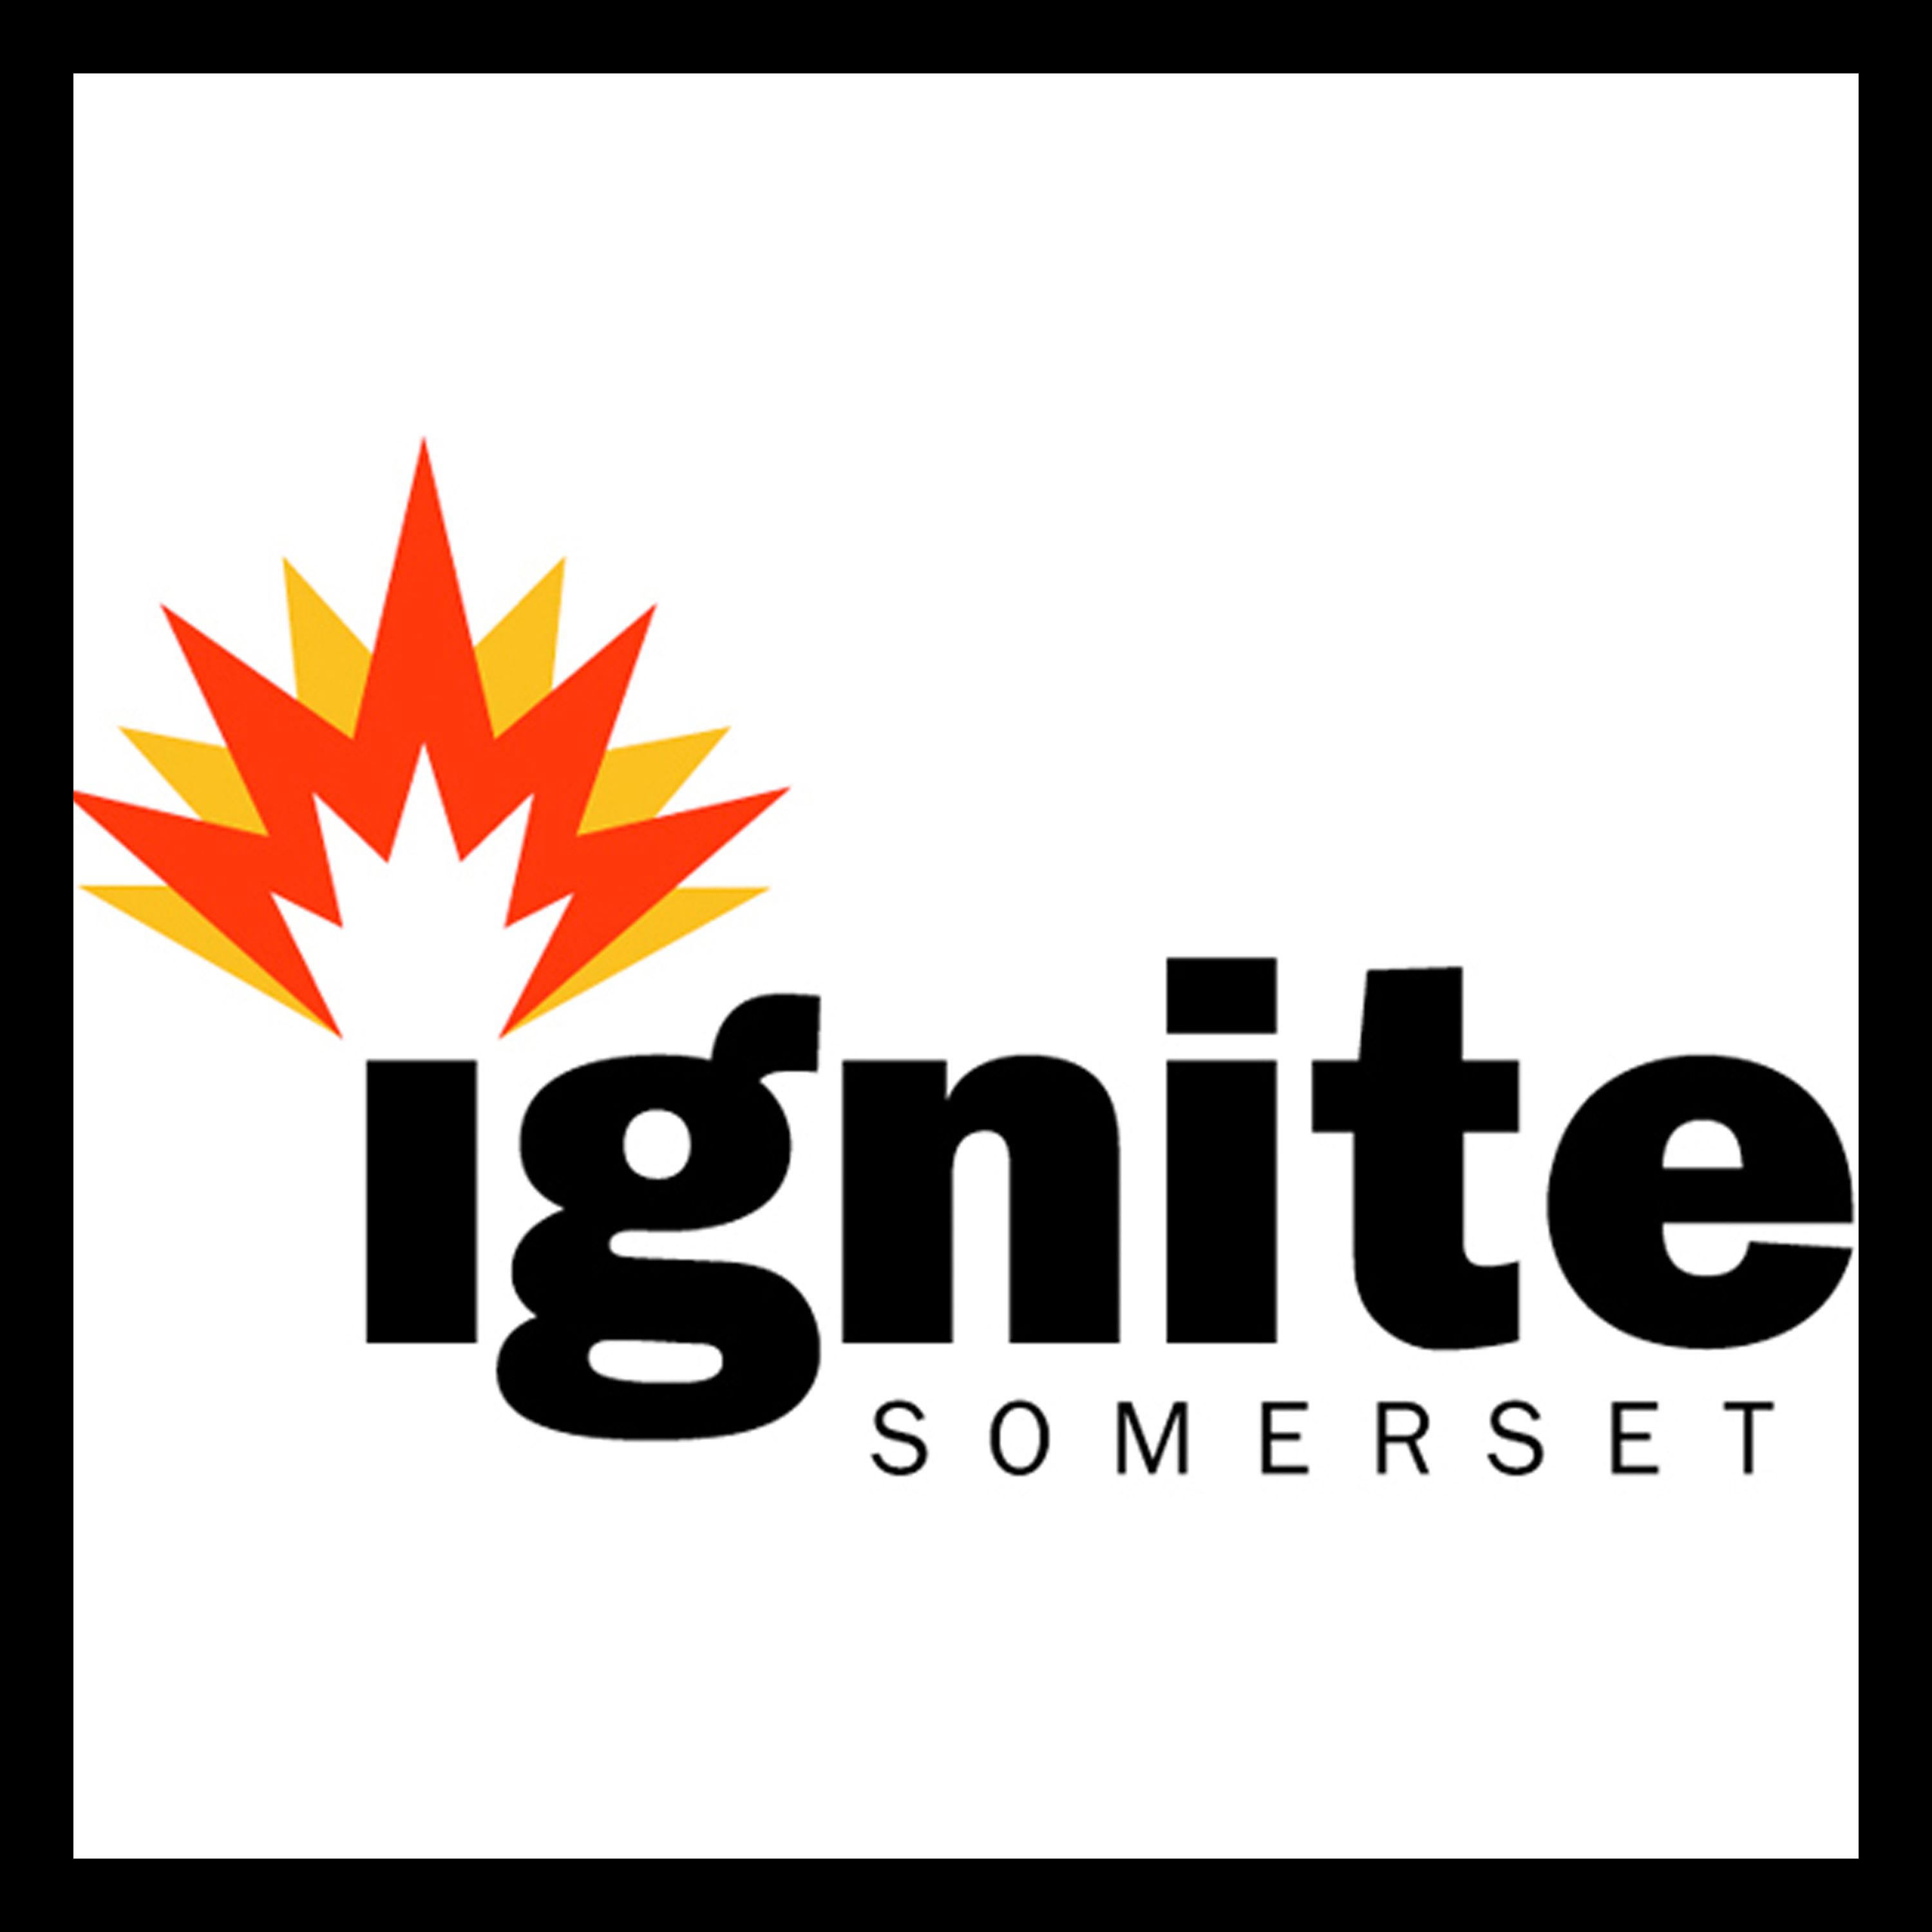 Ignite Somerset presents